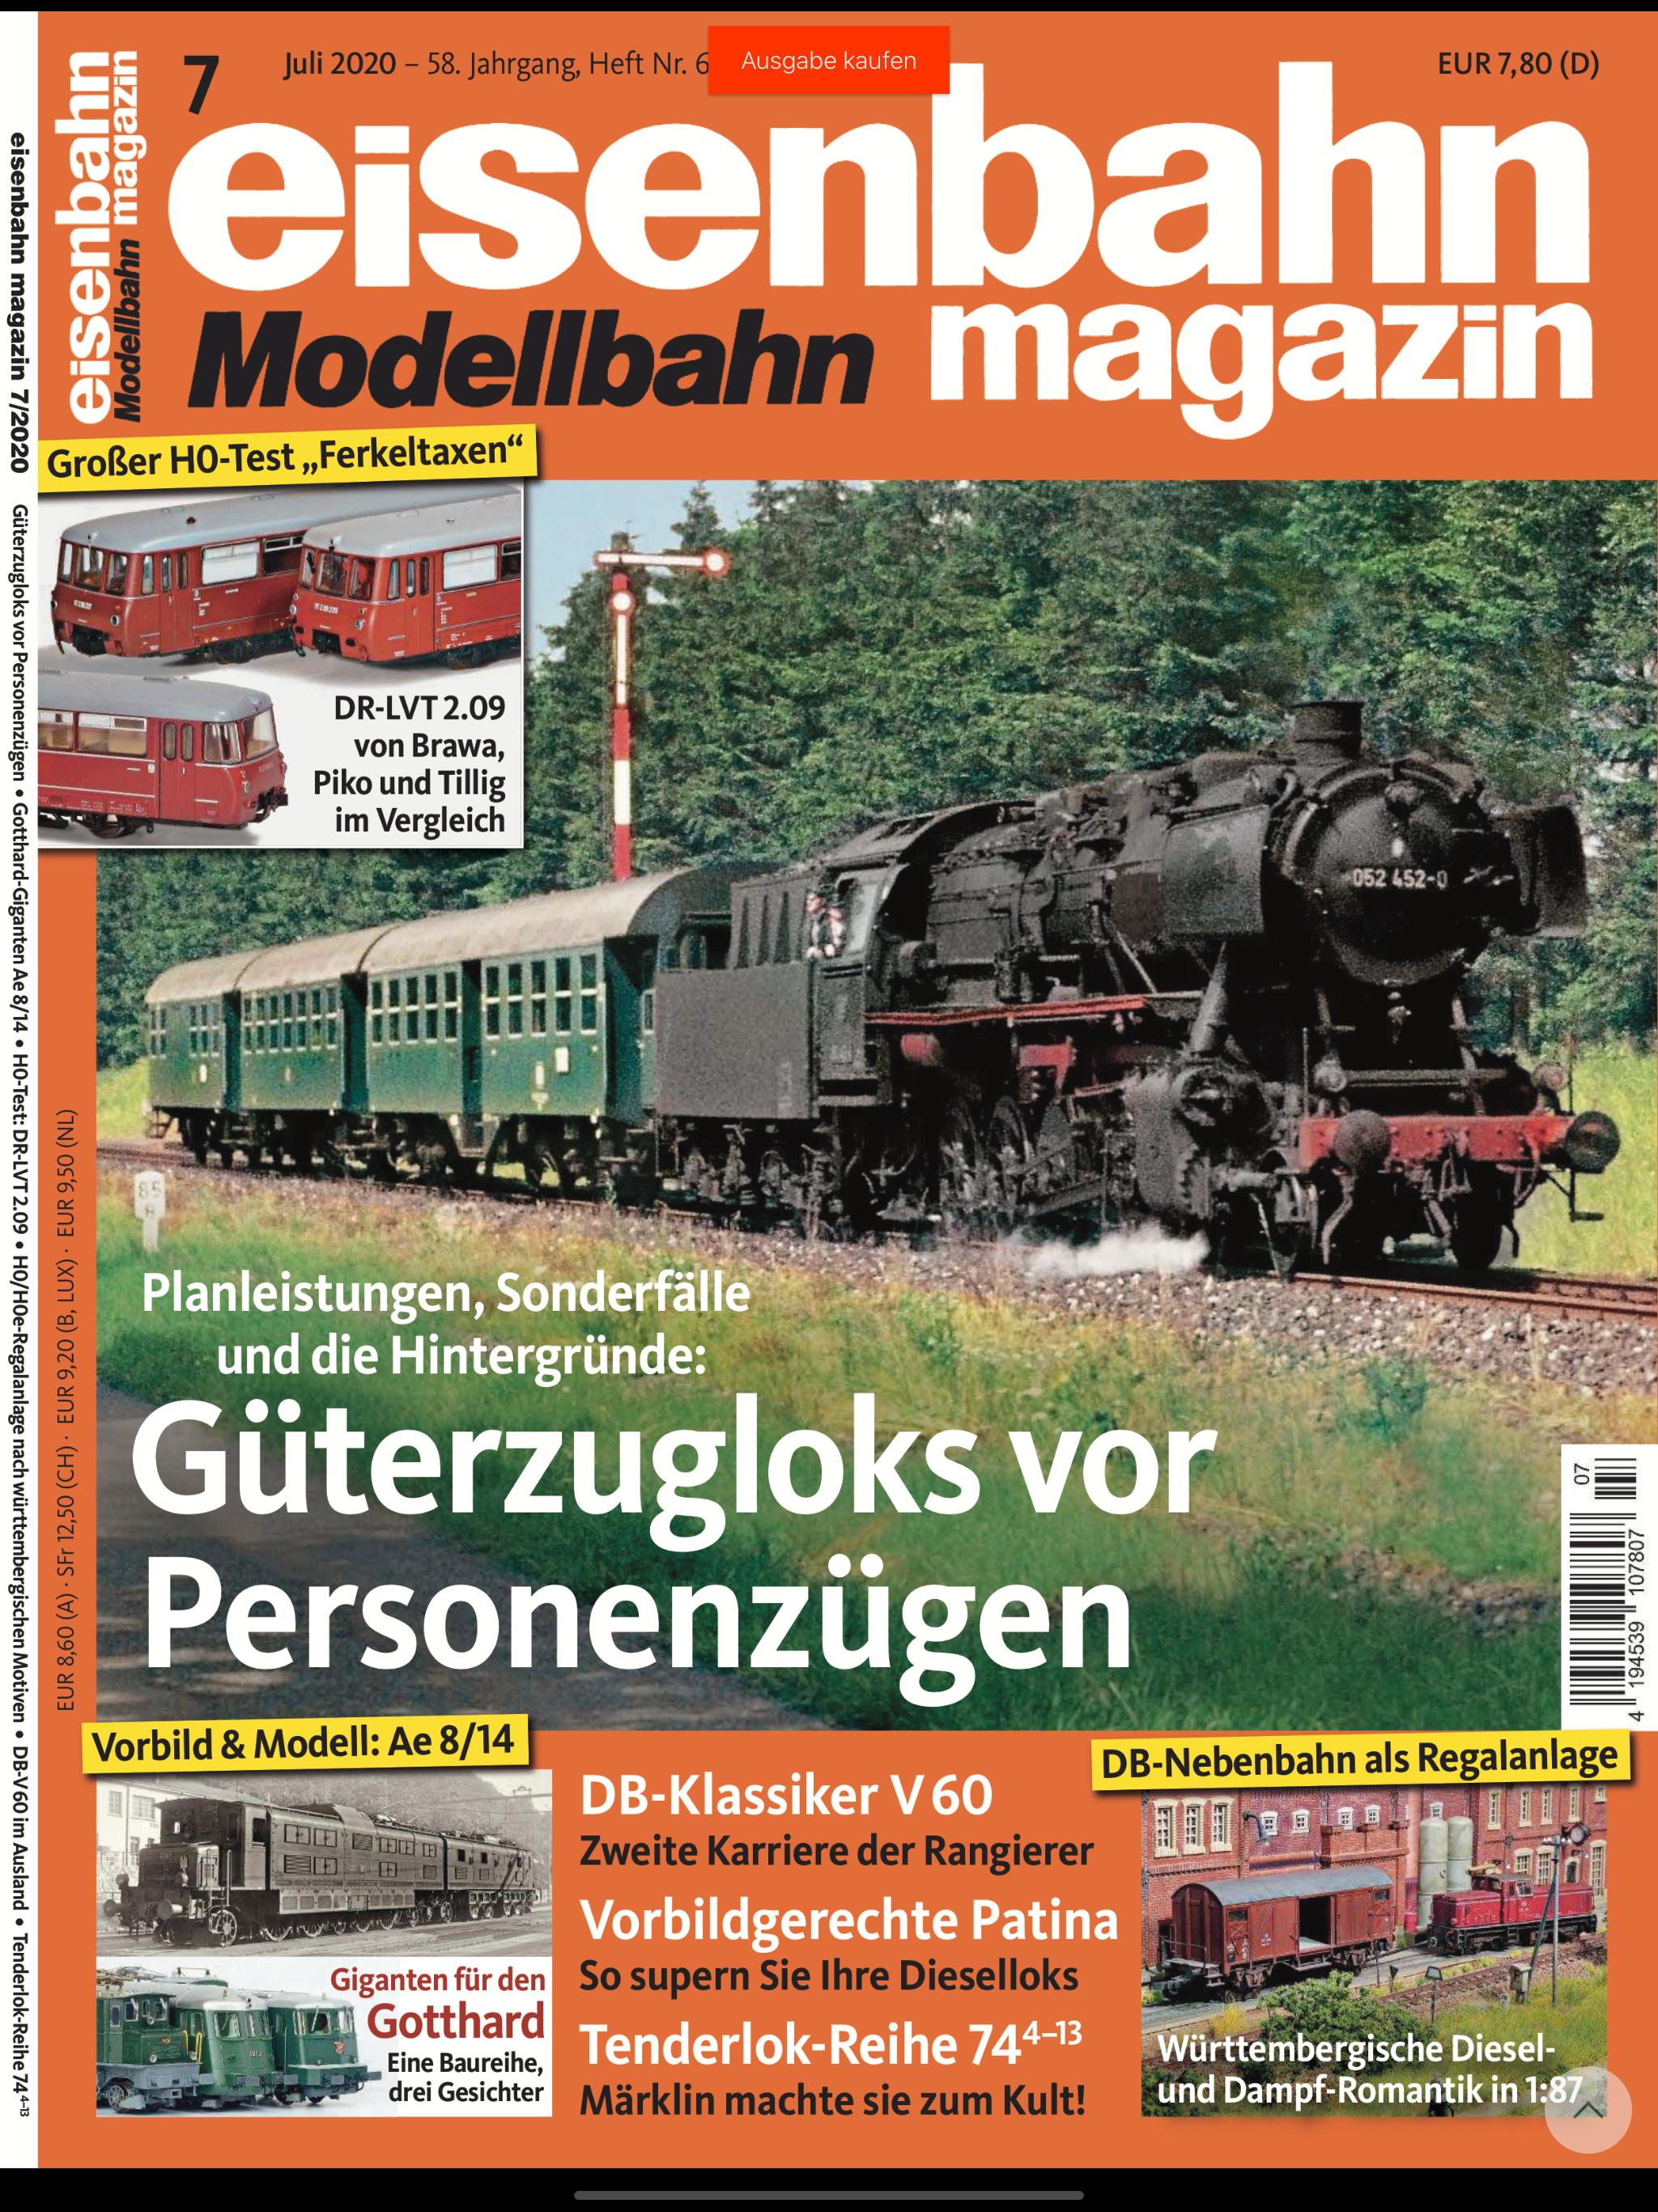 Eisenbahn Magazin for Android - APK Download